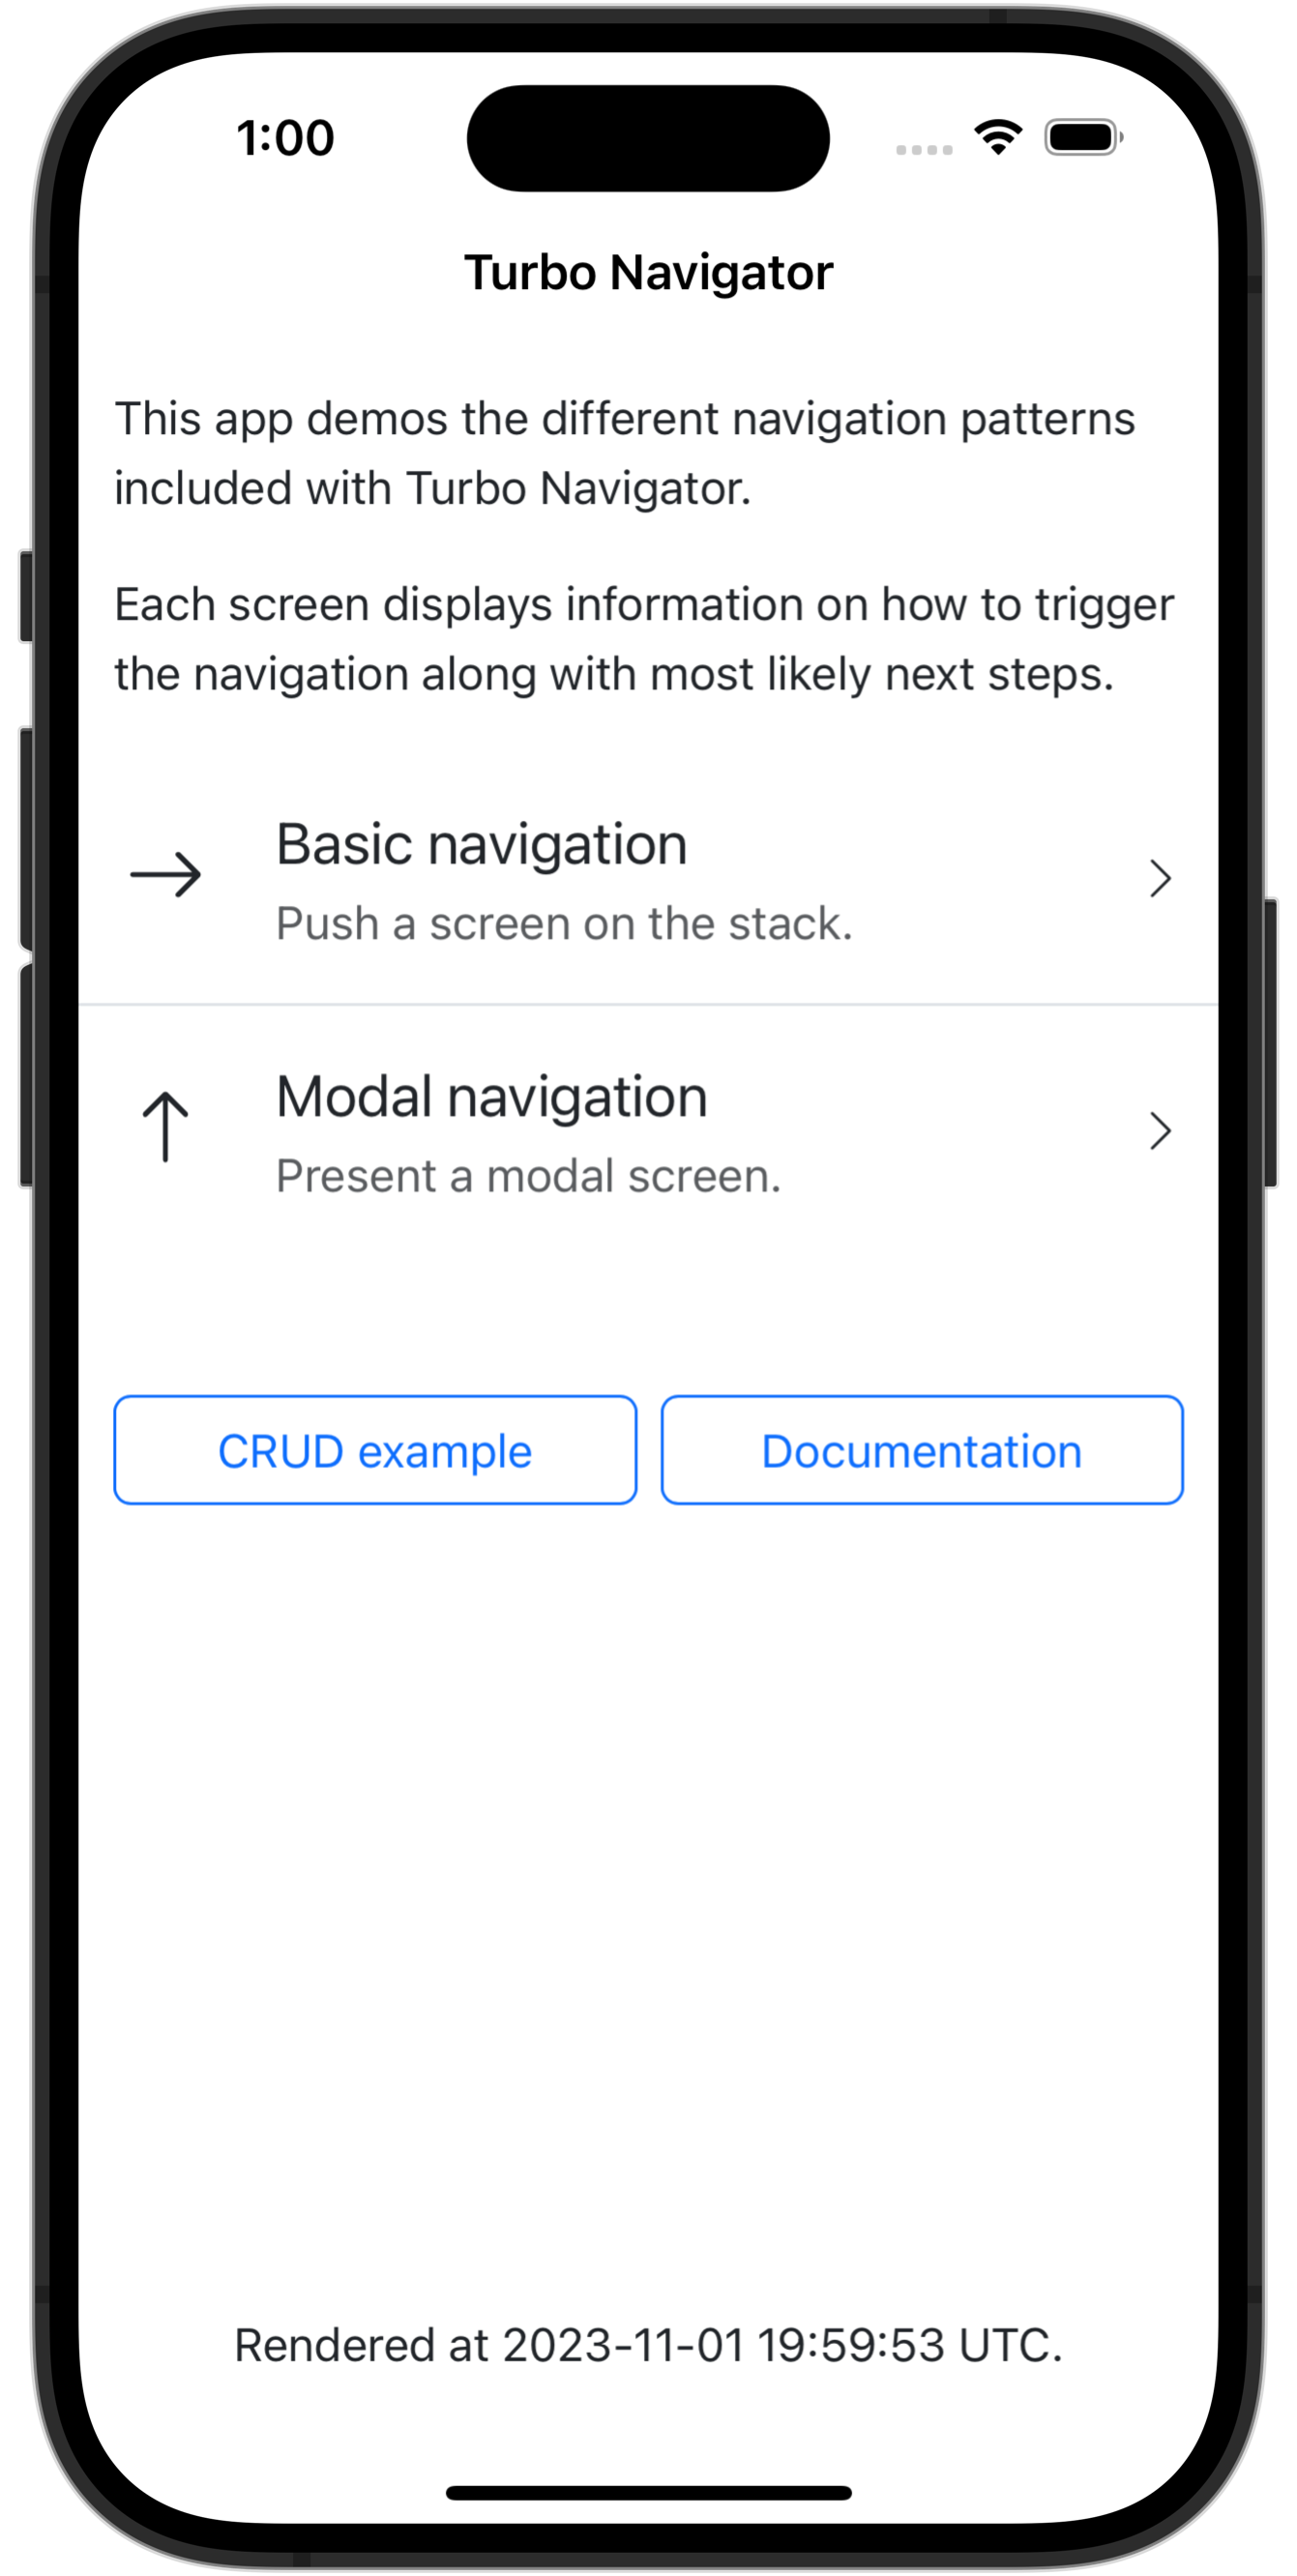 Turbo Navigator demo app